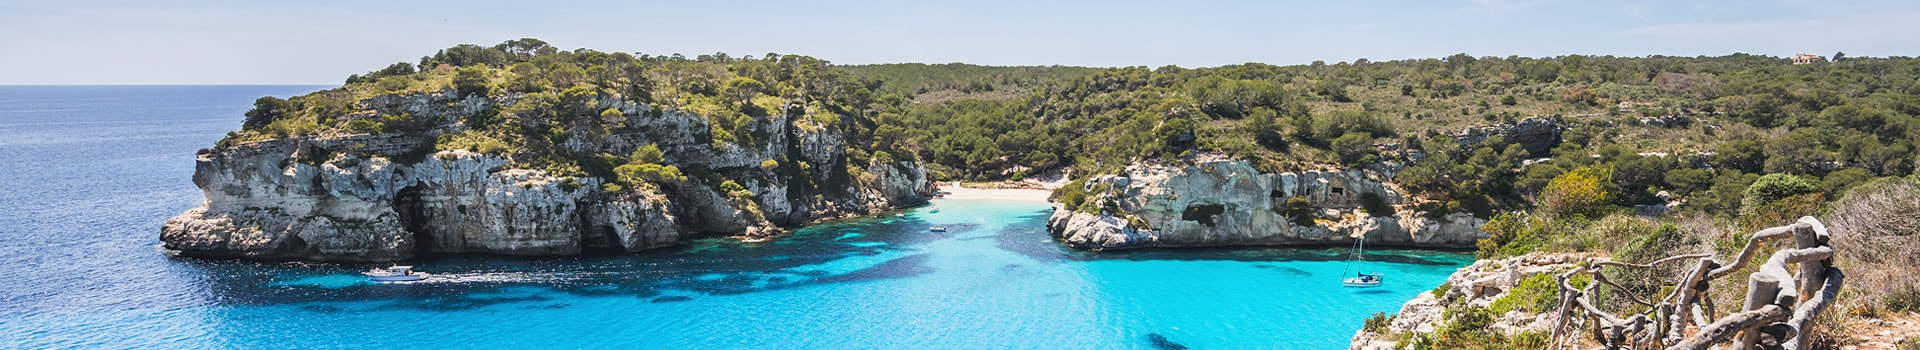 Mallorca - Menorca